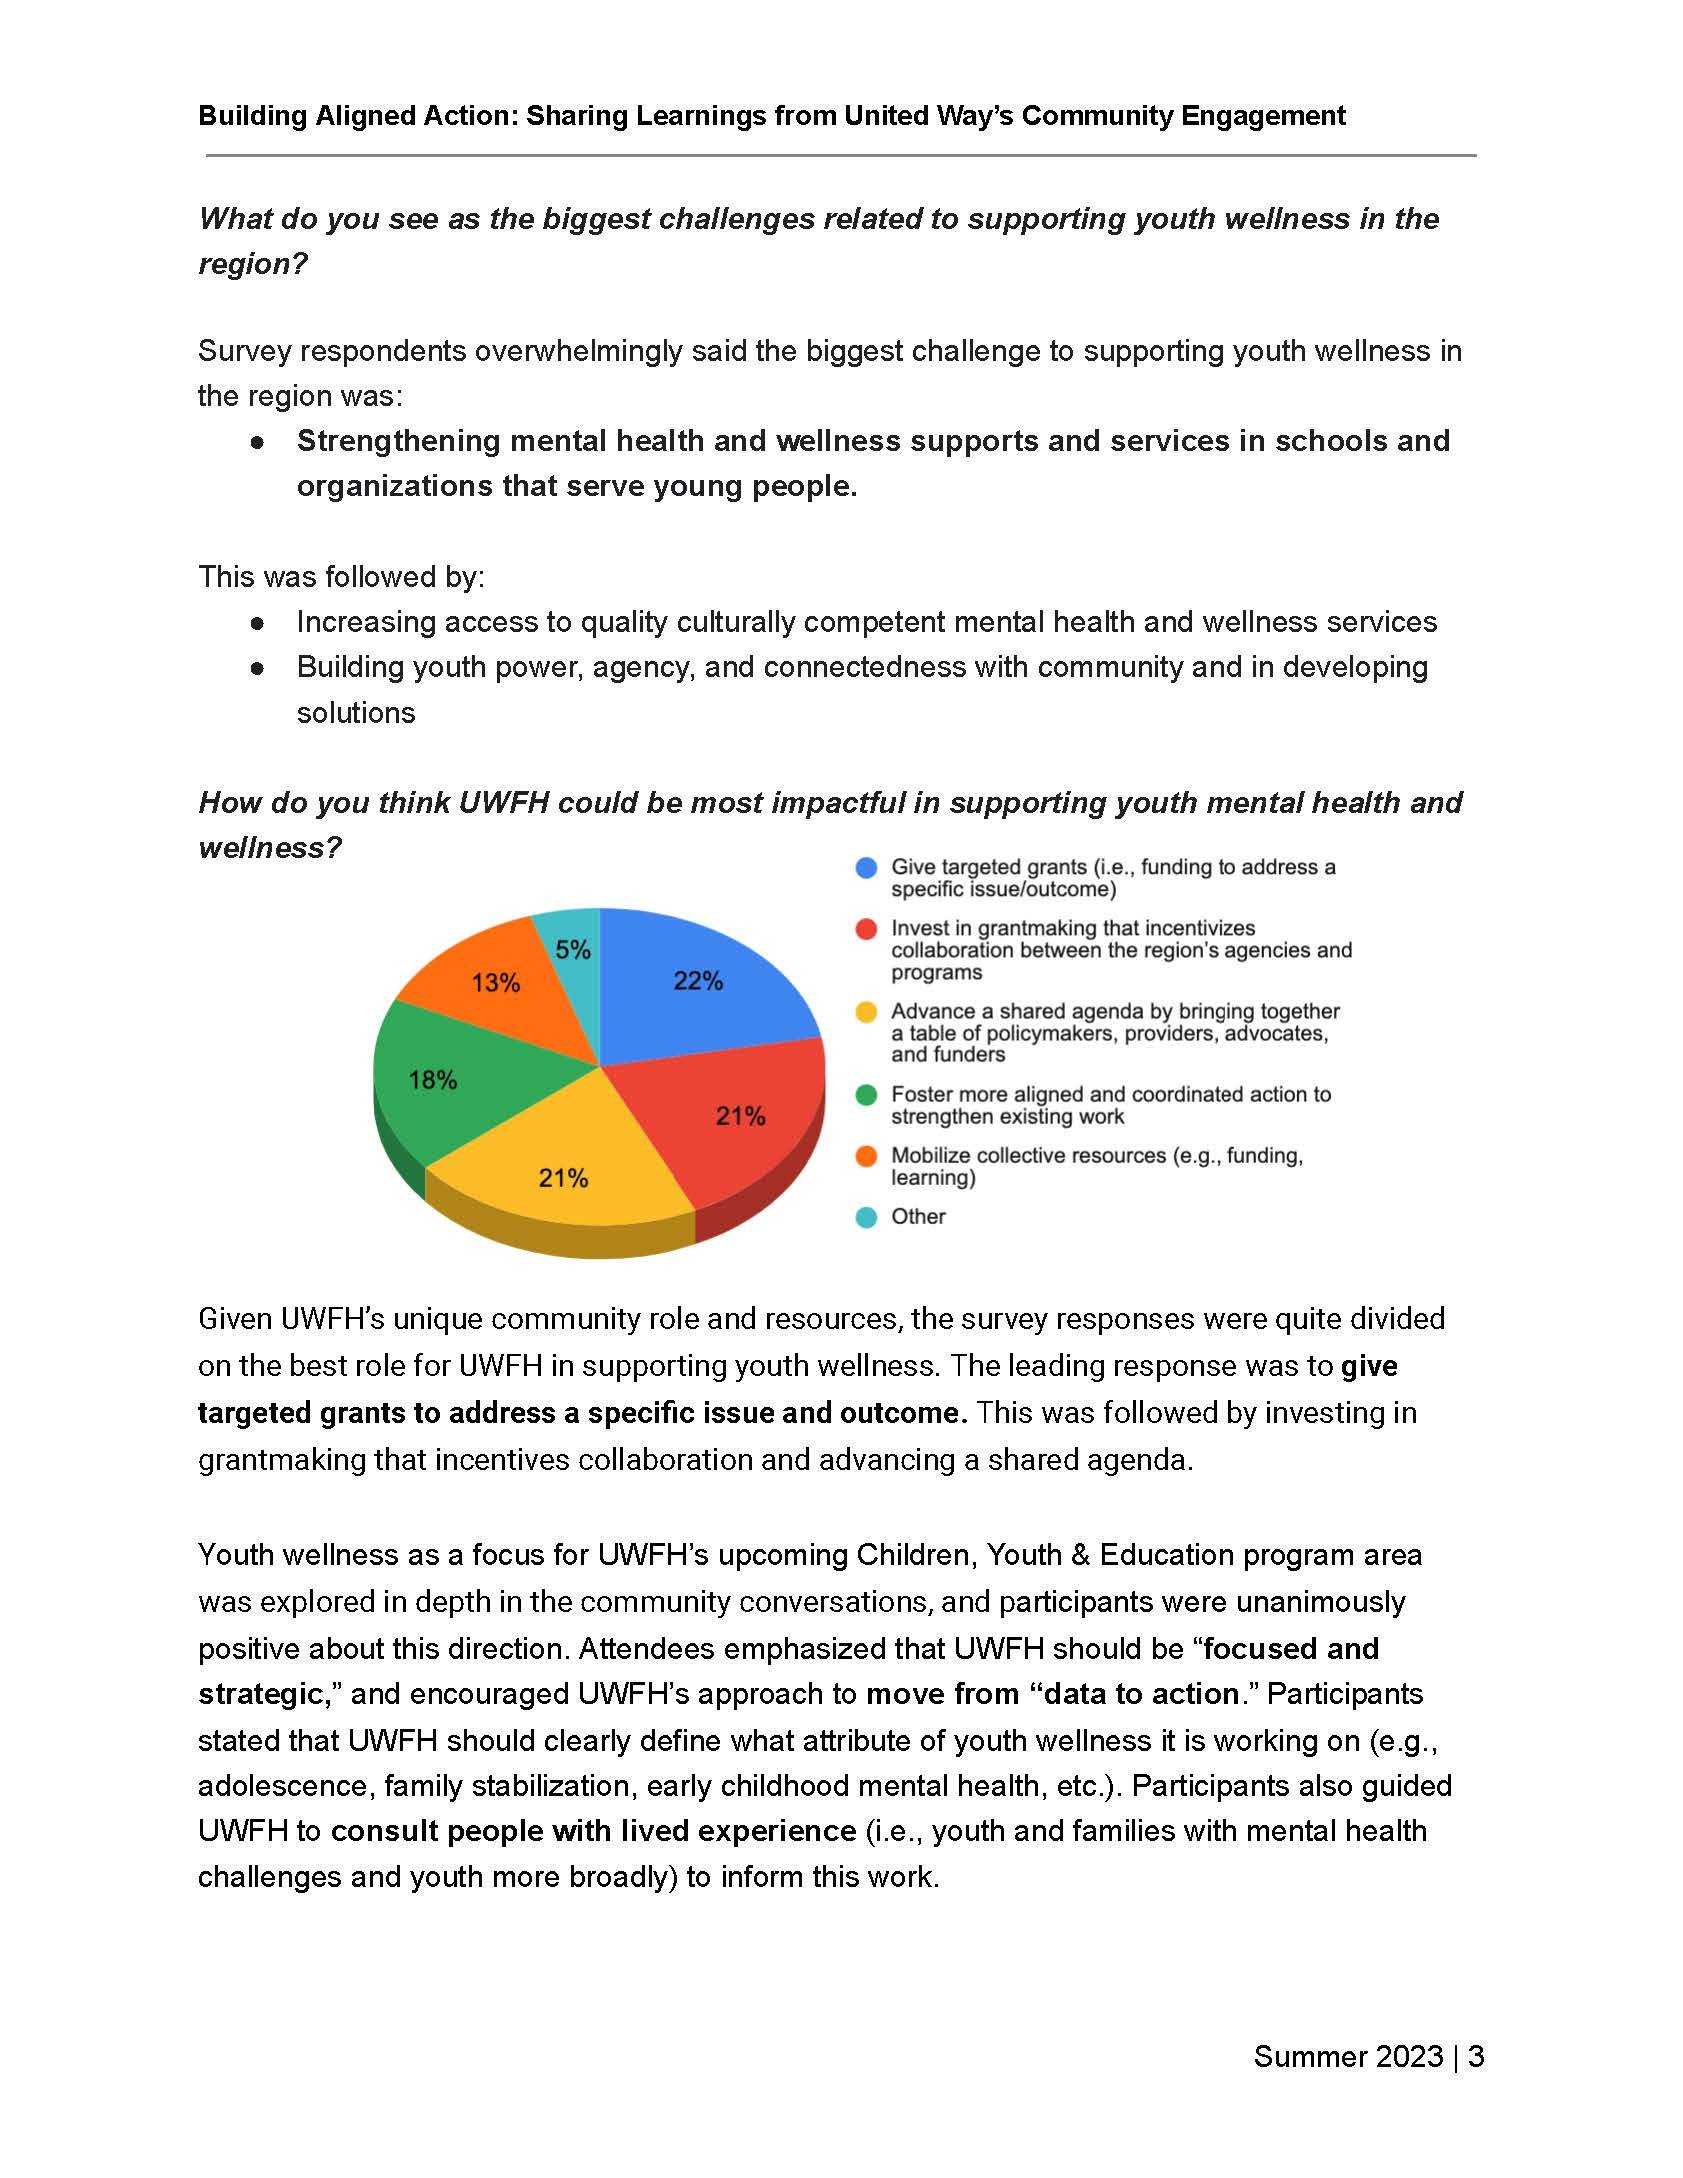 UWFH, Community Conversation & Survey - Summary DOC FINAL-1_Page_3.jpg